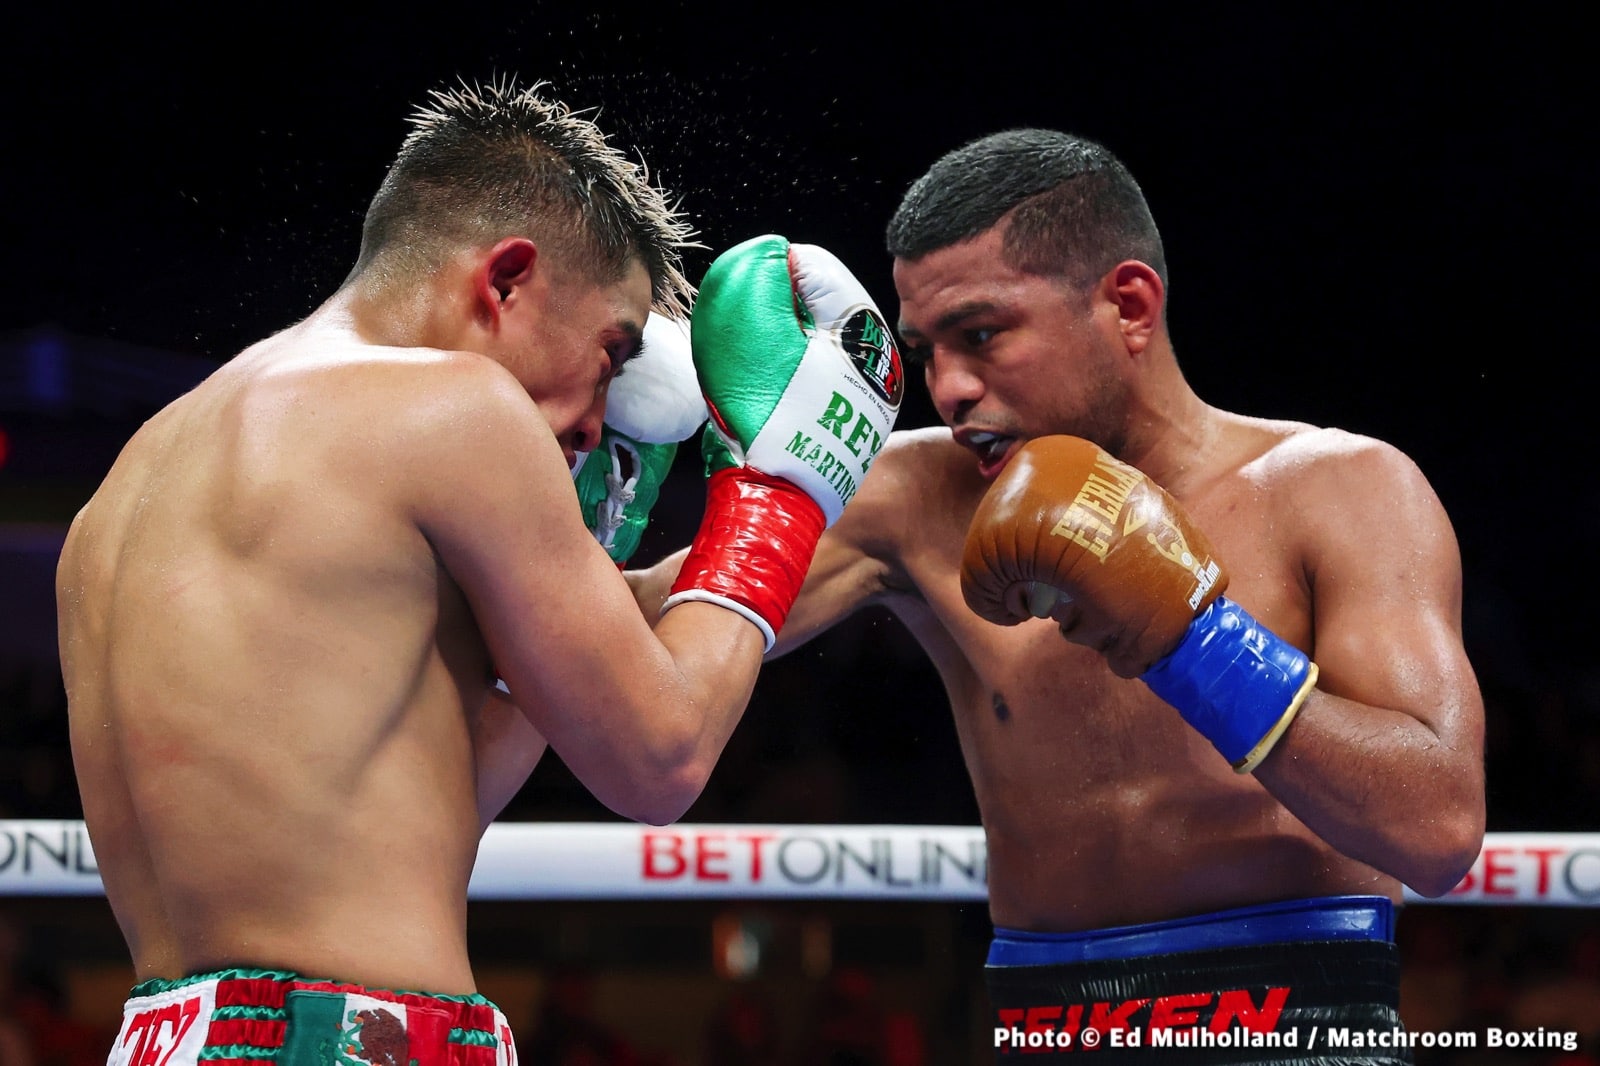 Marc Castro boxing image / photo